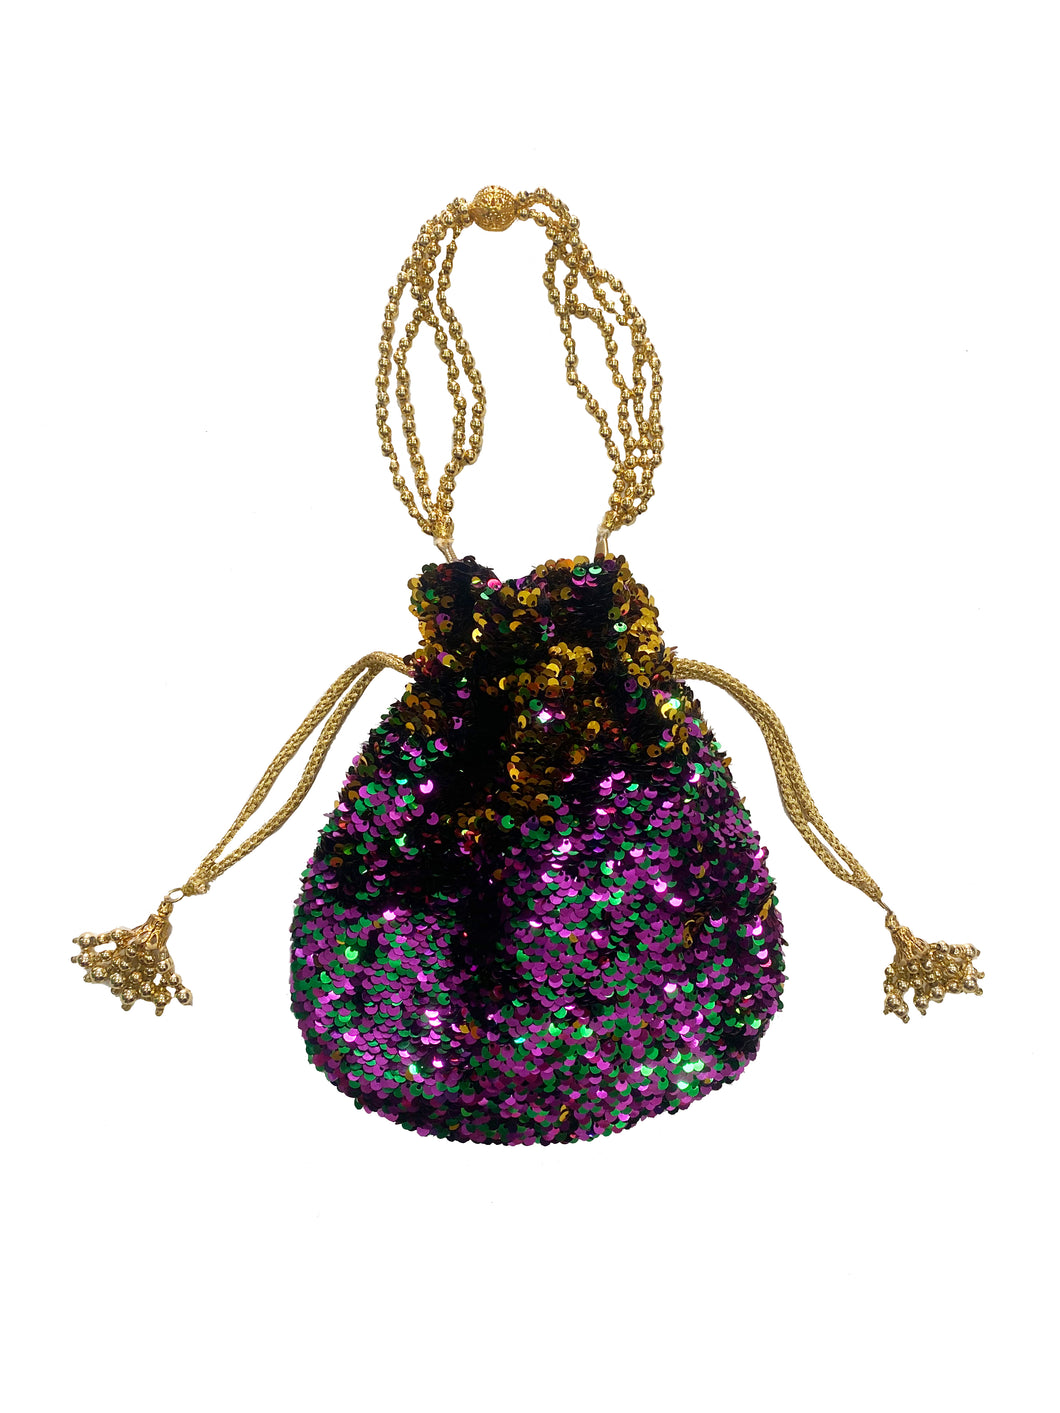 Purple, Green, and Gold Reversible Confetti Sequin Drawstring Purse